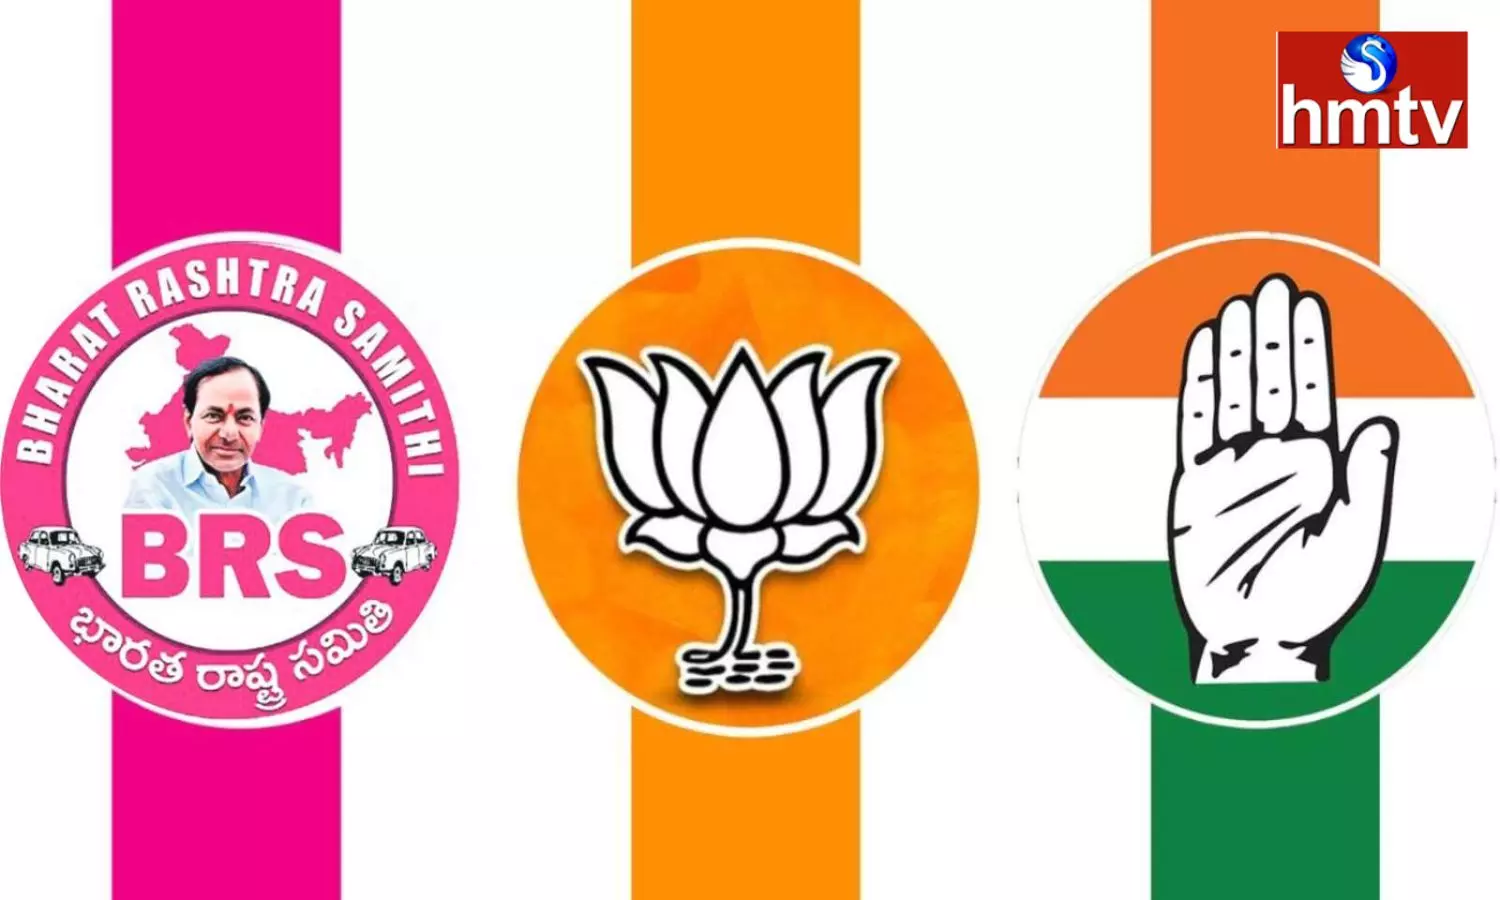 Heated Politics In Telangana Congress, BJP AndBJP Meetings On The Same Day